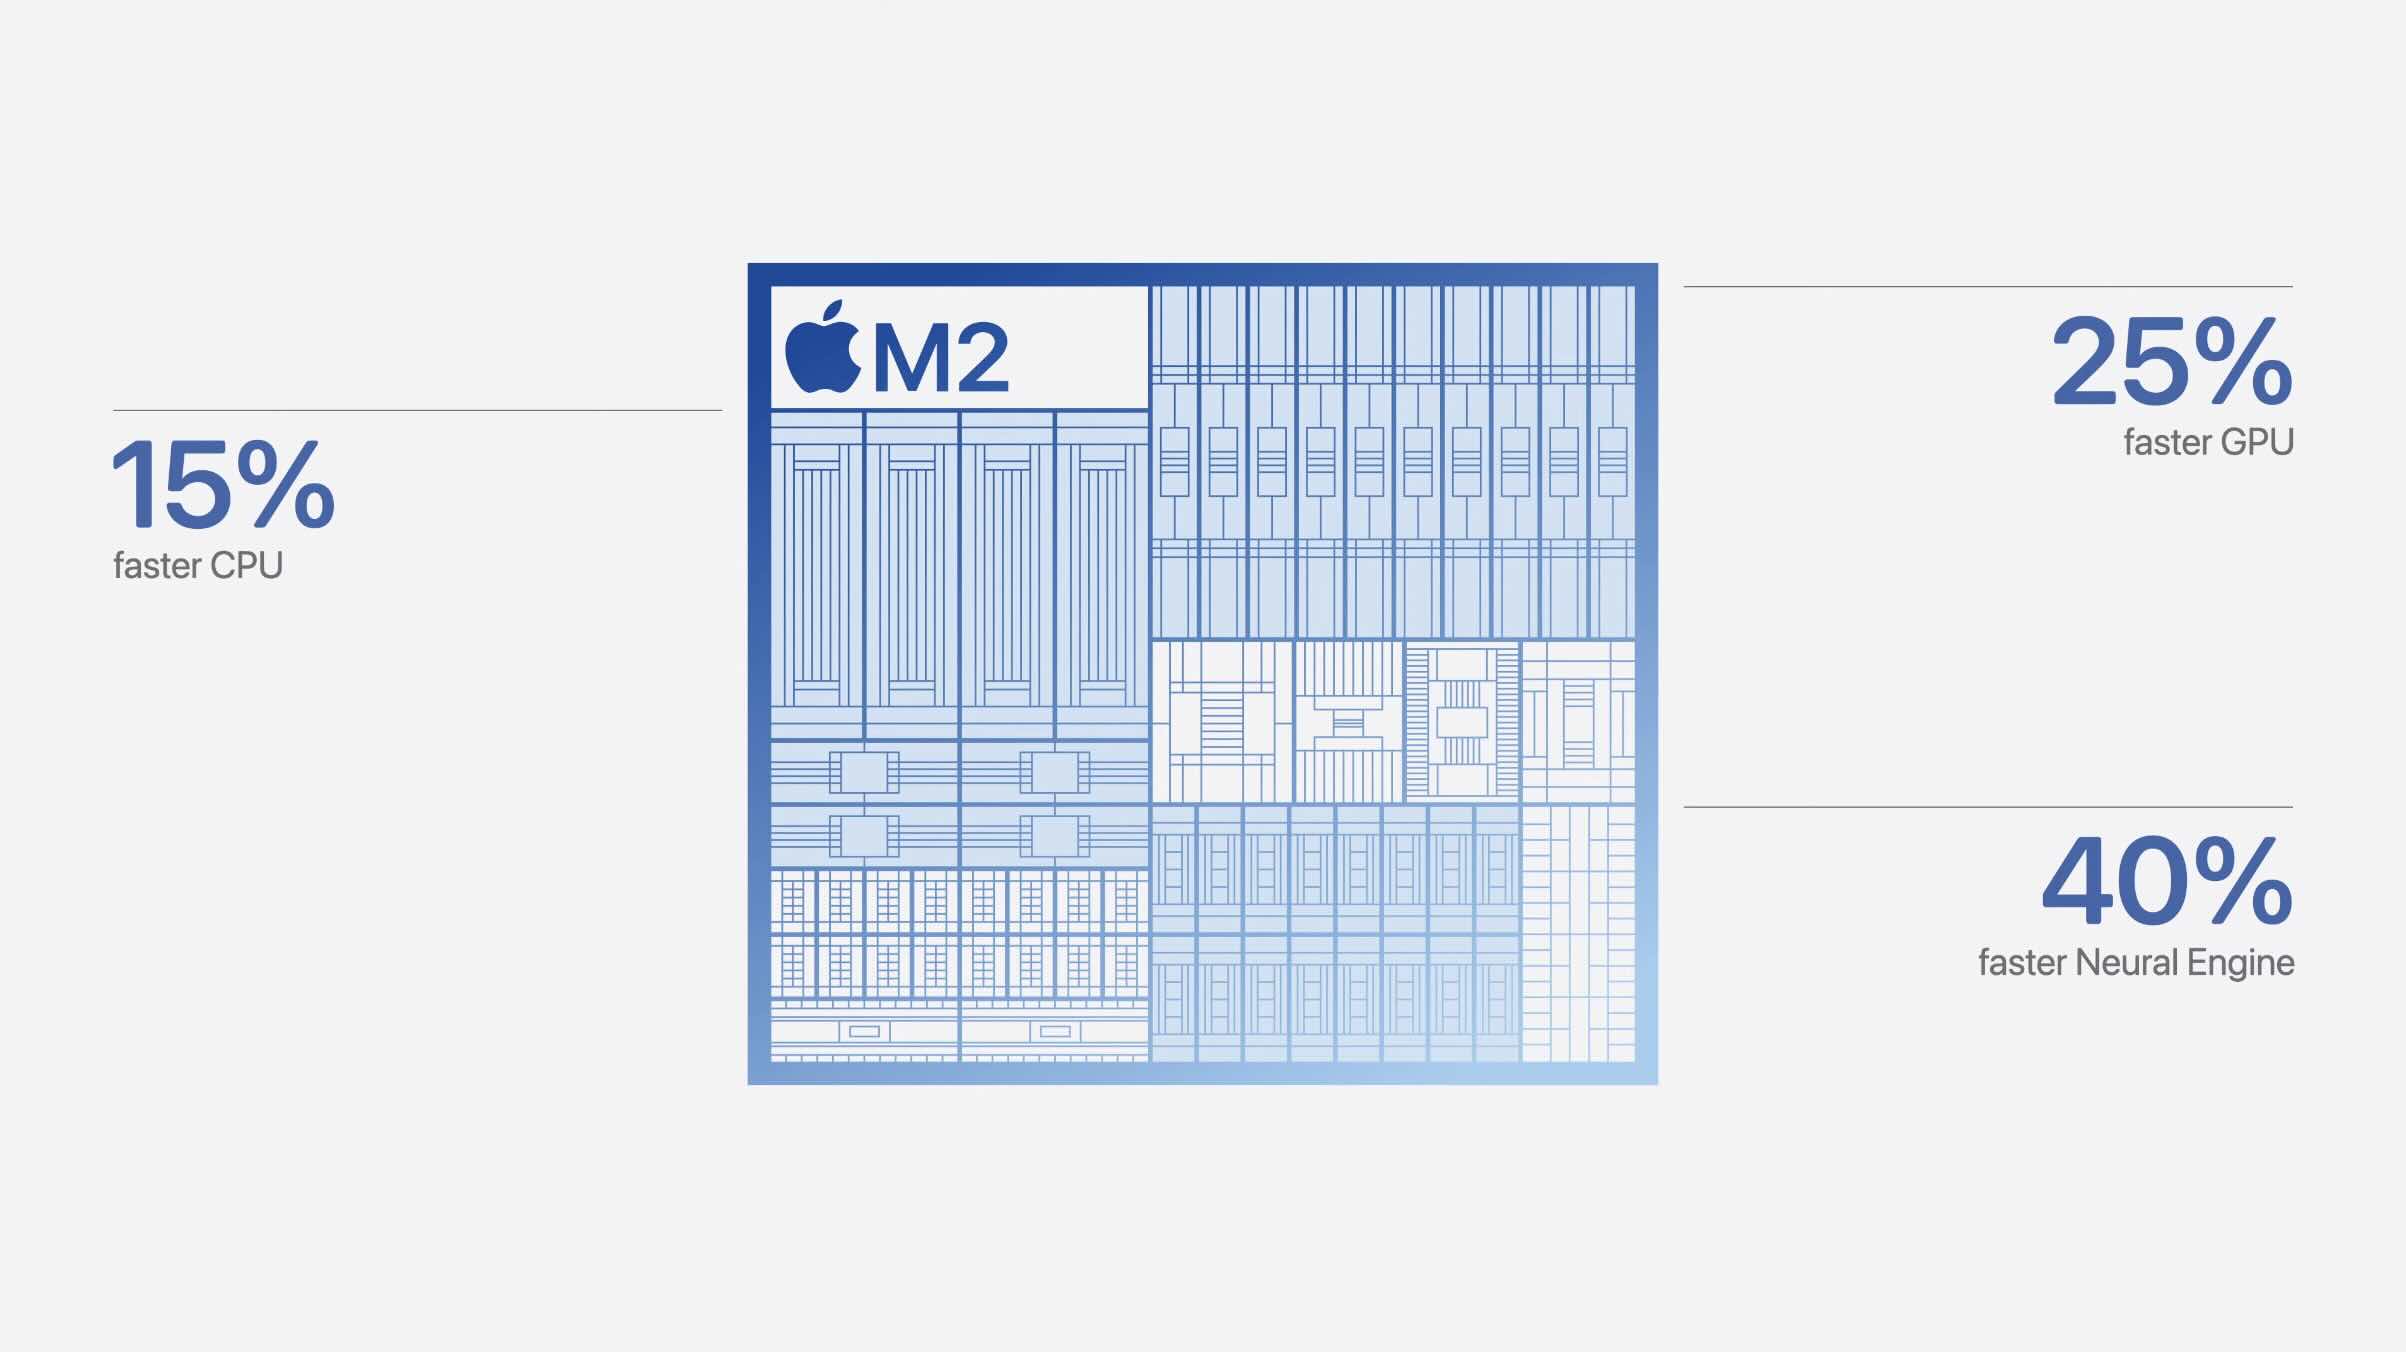 M2 iPad Air vs M1 iPad Air performance